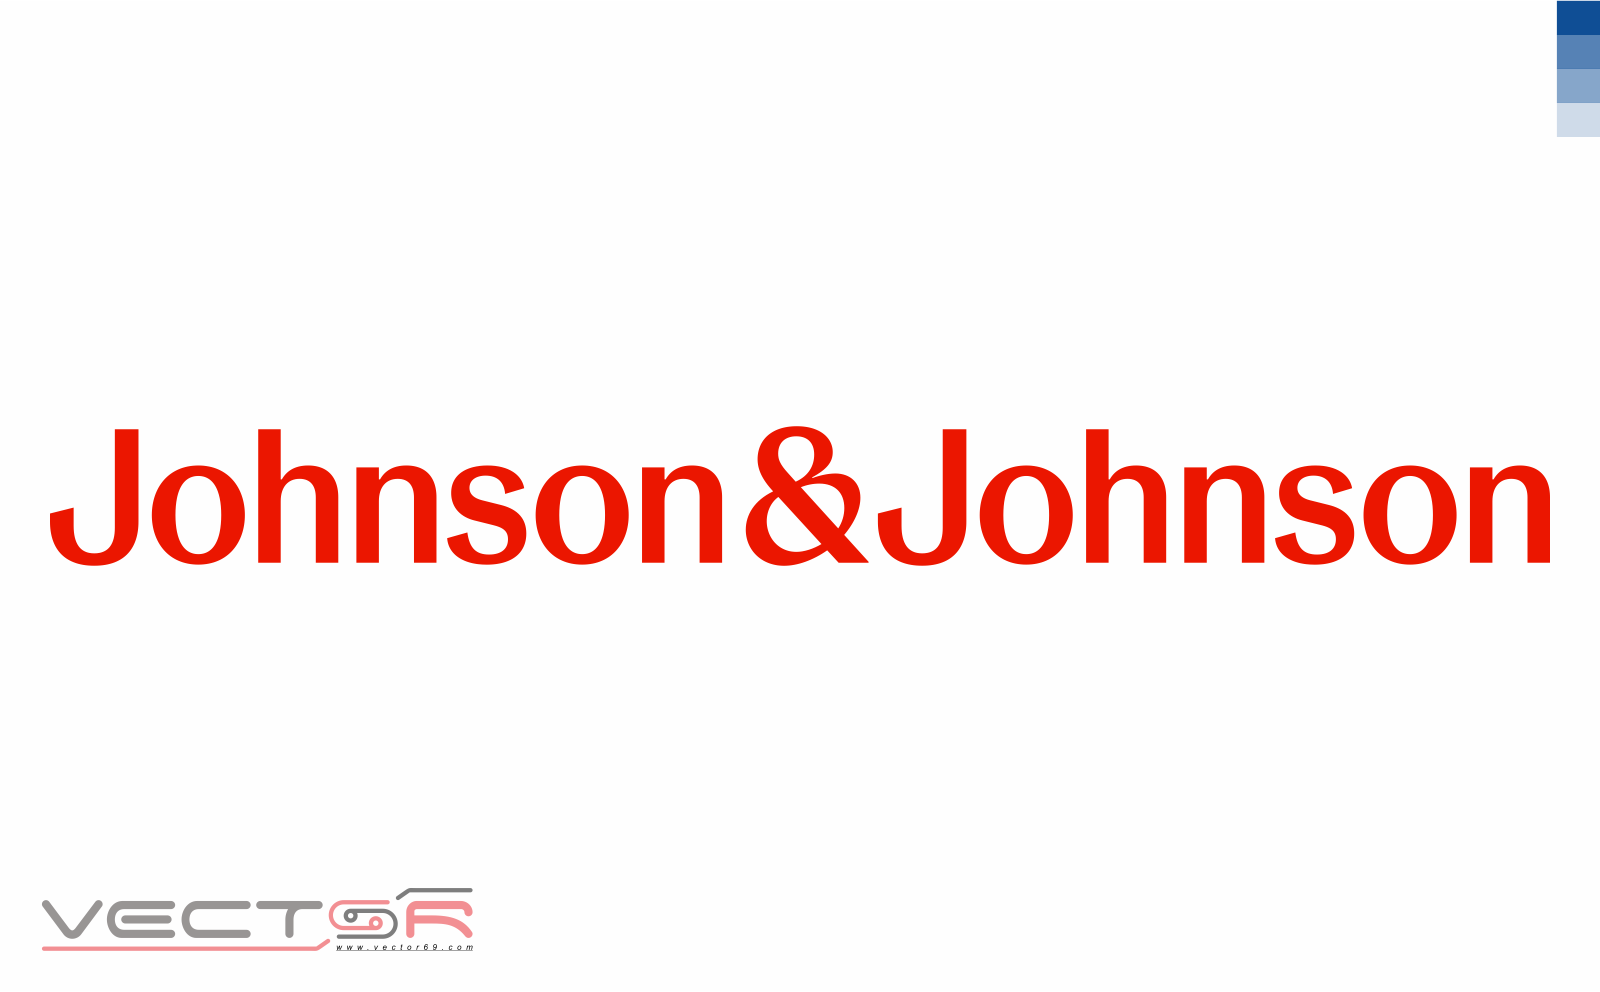 Johnson & Johnson Logo - Download Vector File Encapsulated PostScript (.EPS)